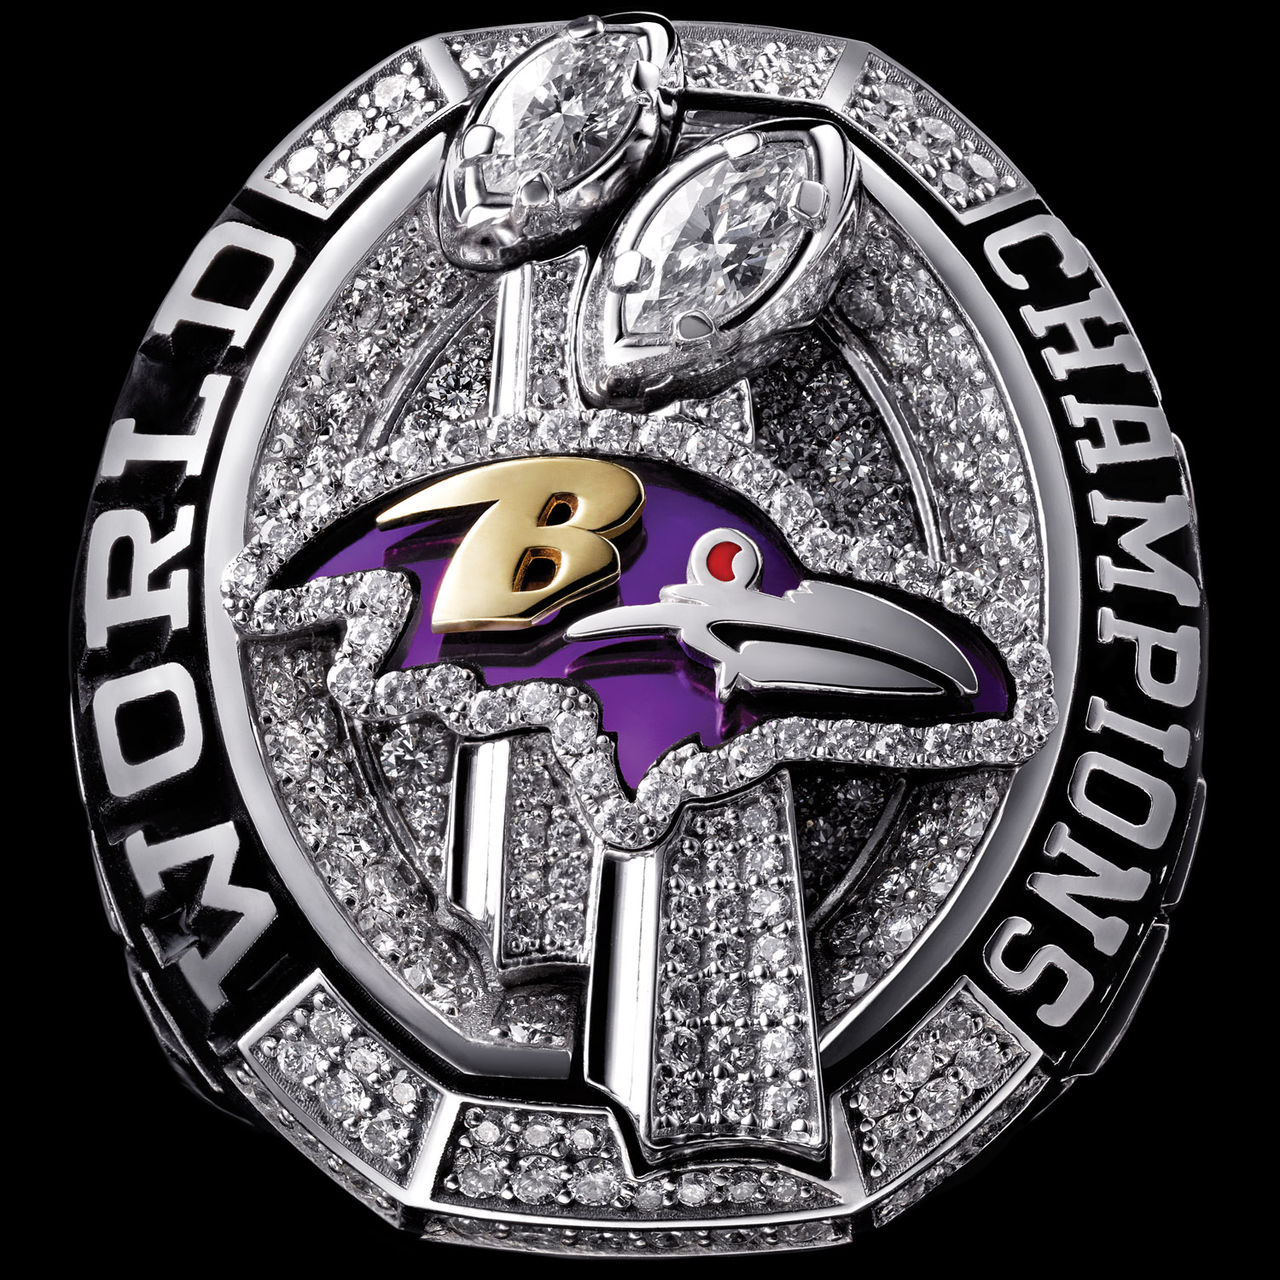 Anillo de los Baltimore Ravens de 2013